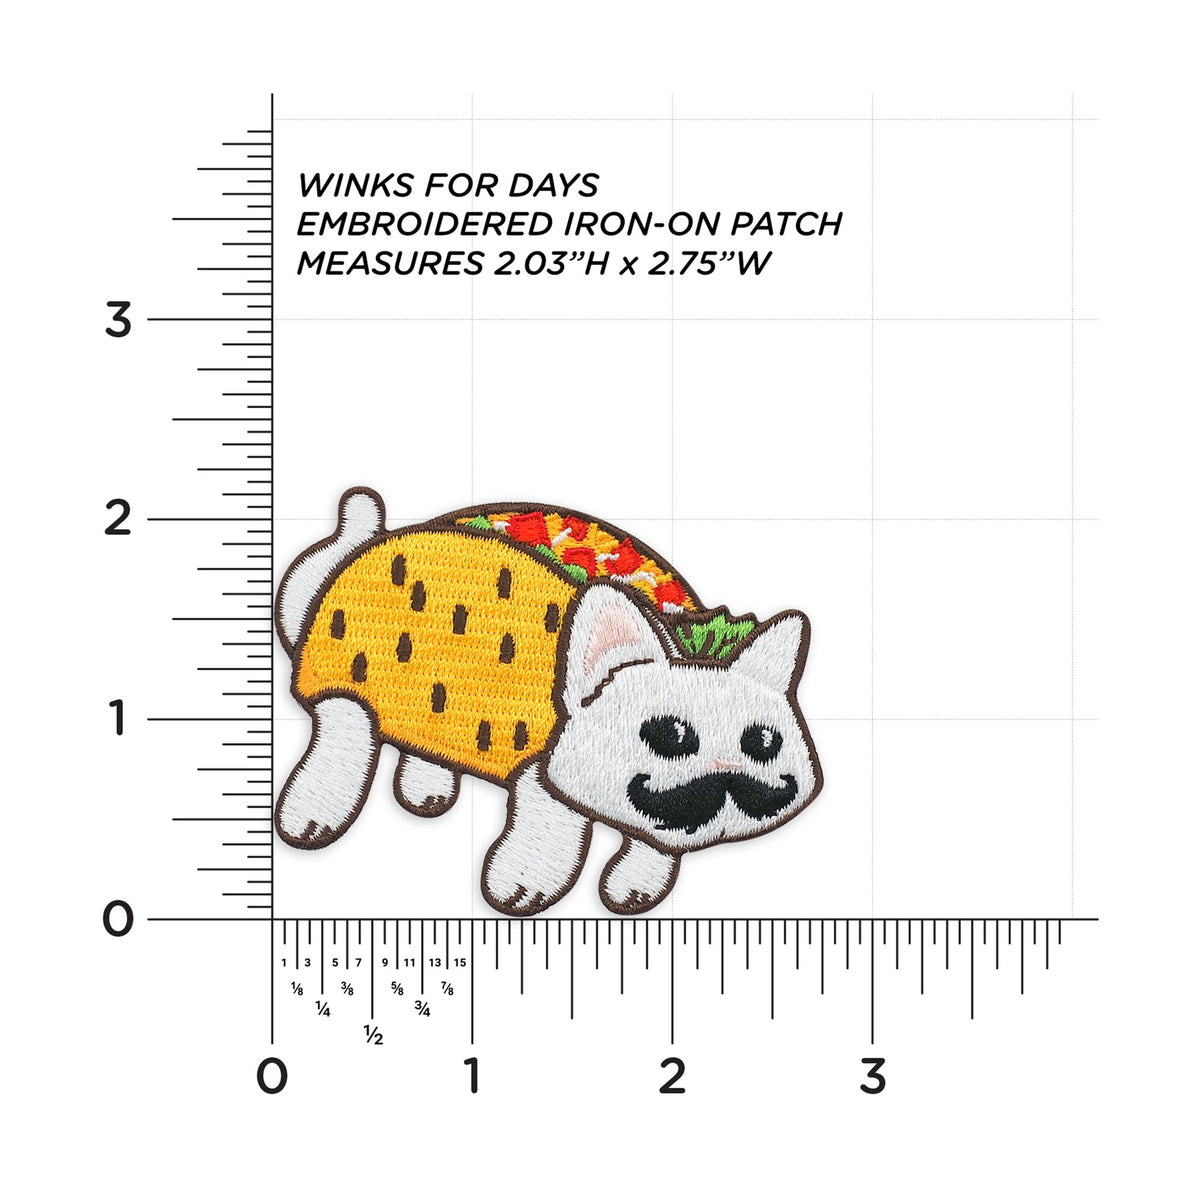 Taco Cat Spelled Backwards is Taco Cat measurements